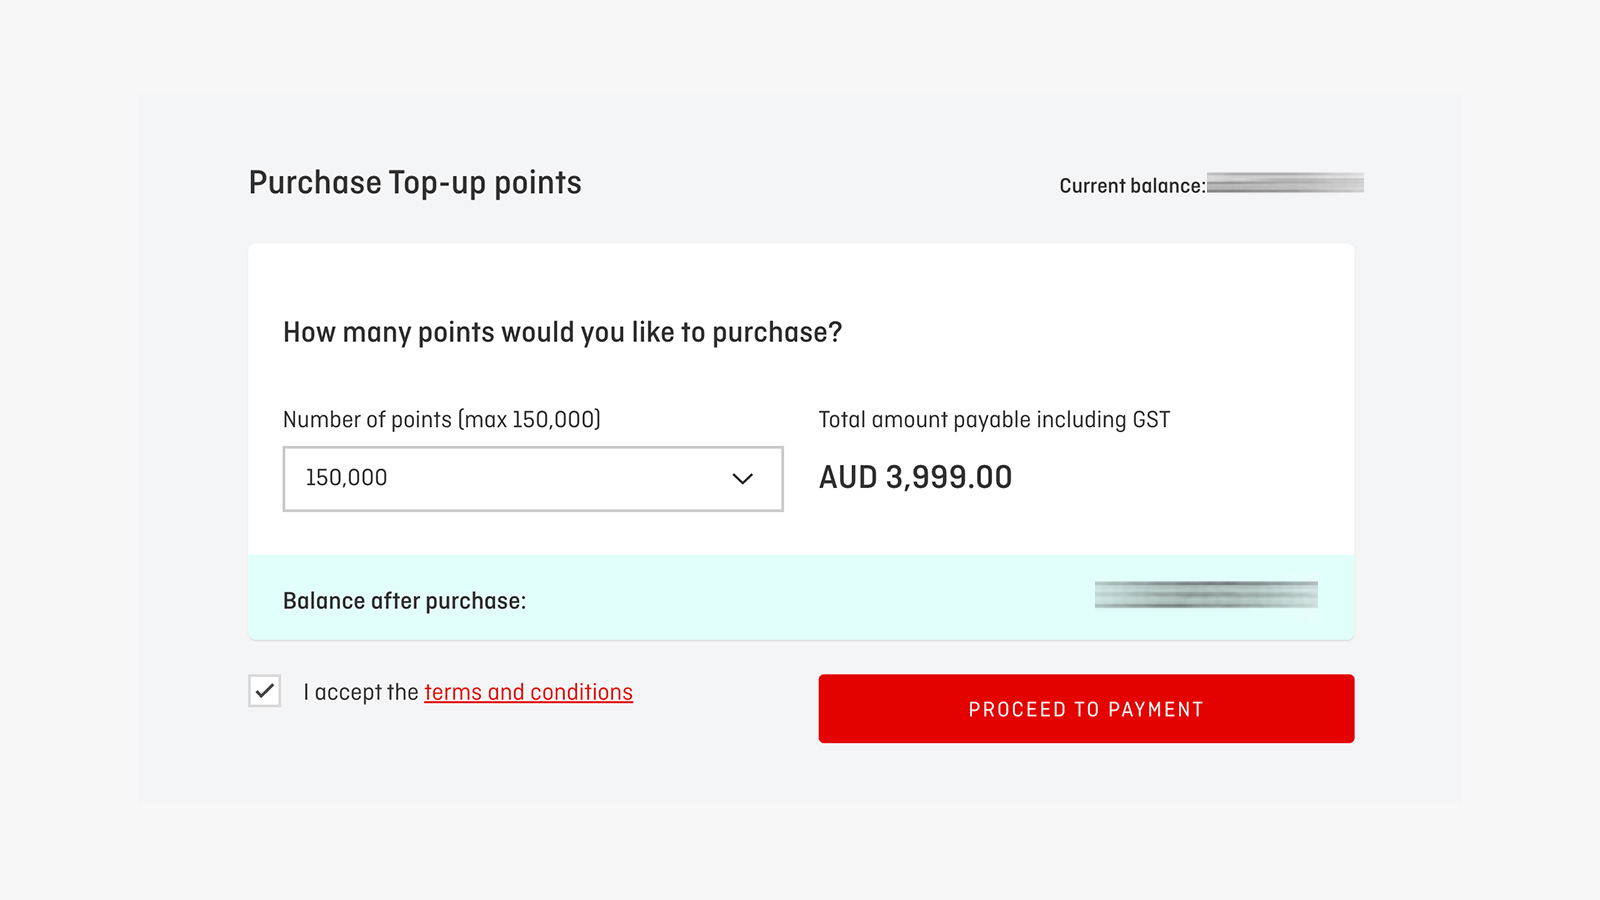 Buying Qantas Points